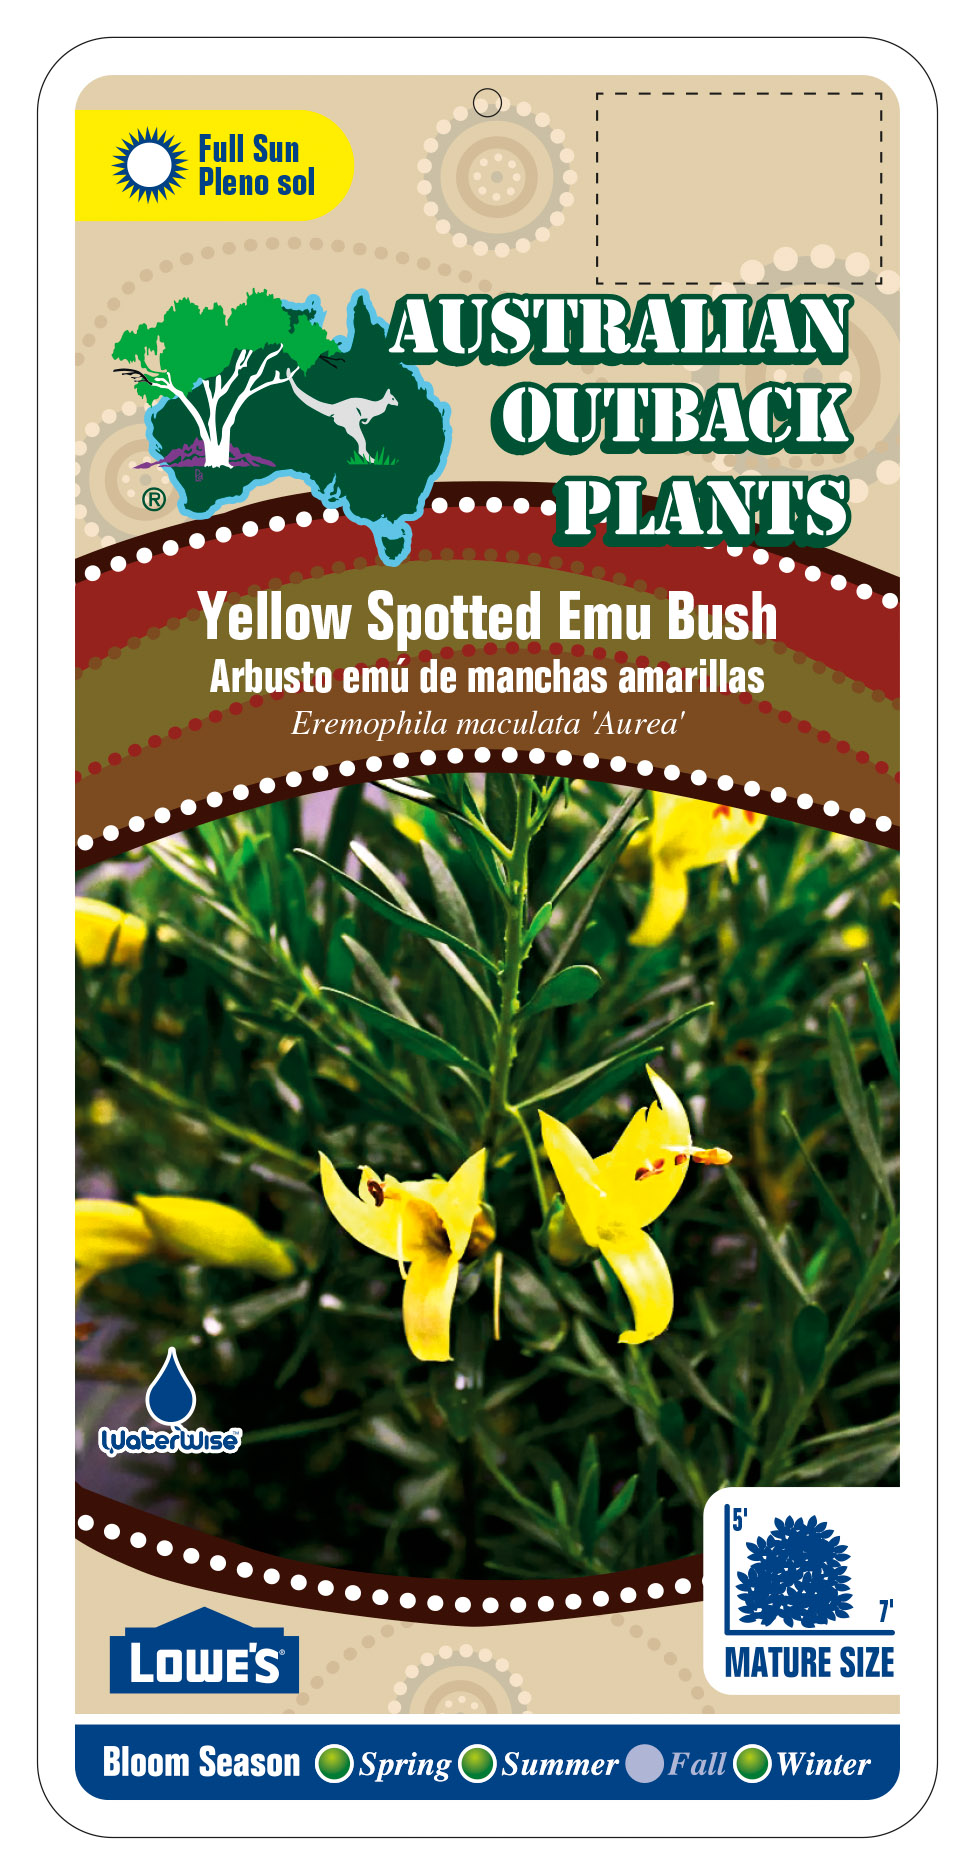 256010_FRONT-Yellow-Spotted-Emu-Bush.jpg